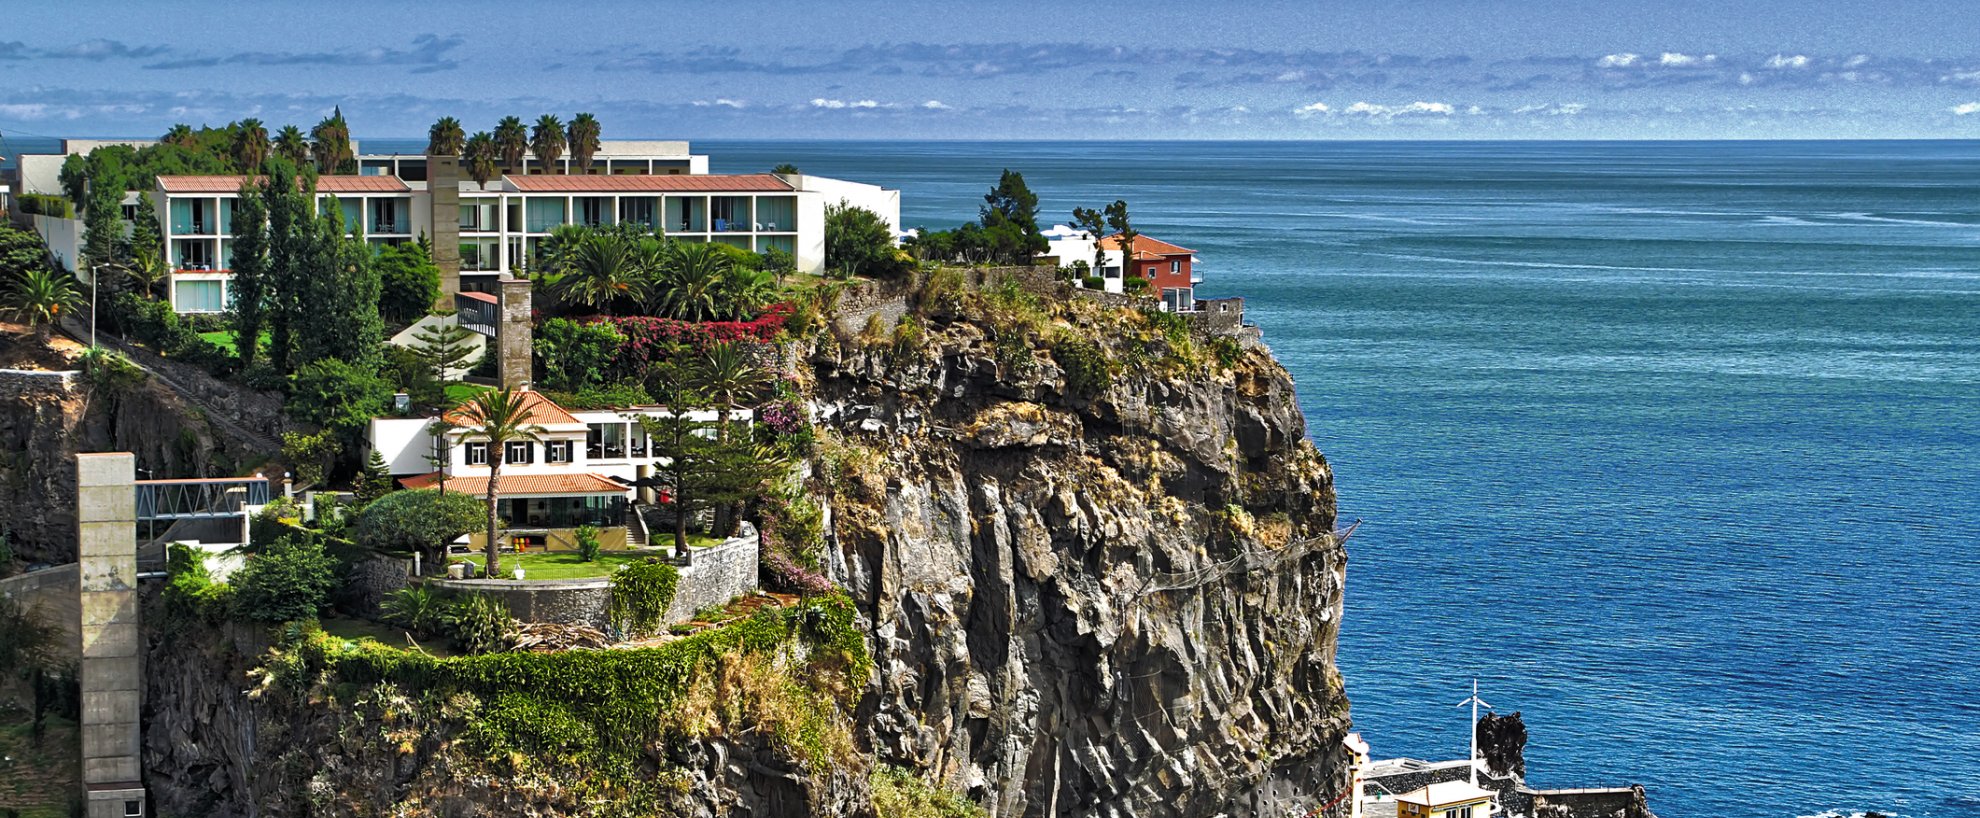 Portugal Madeira Ponta do Sol Designhotel Design Hotel Estalagem Bucht Klippen Strand Meer